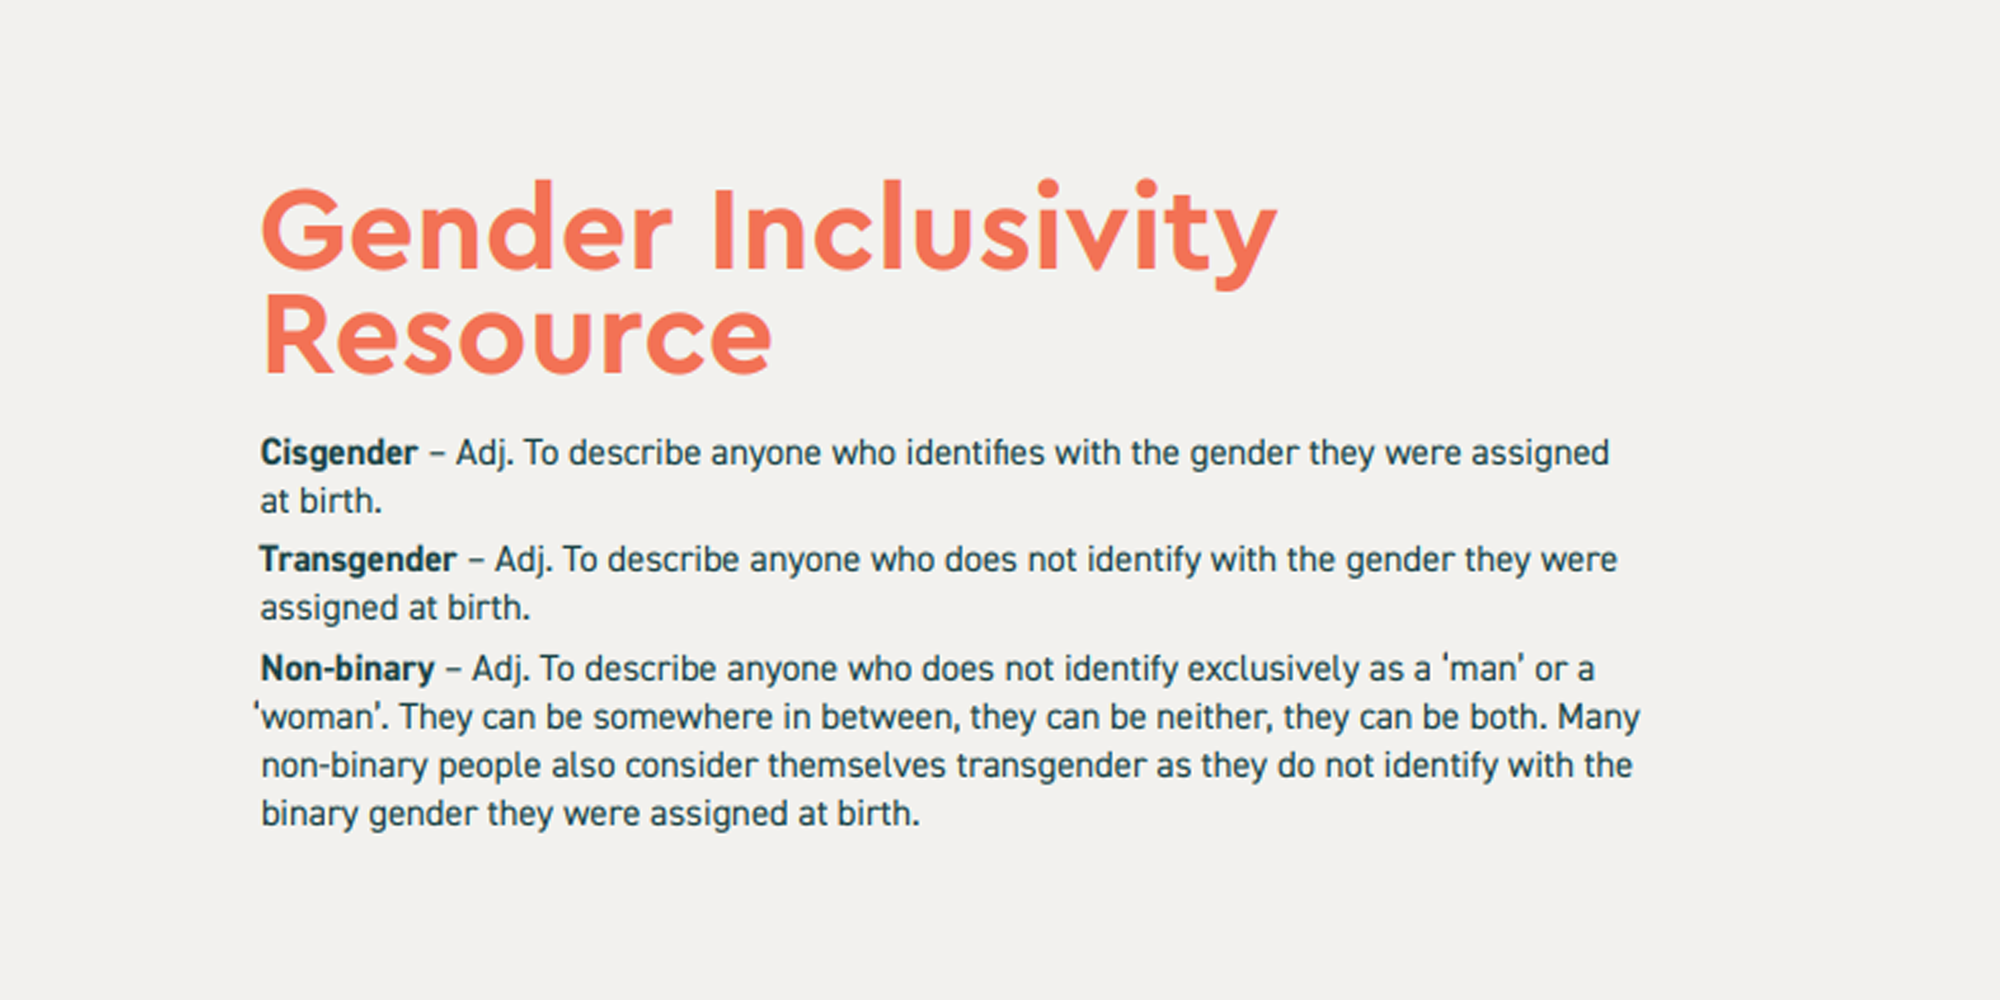 A gender inclusivity resource